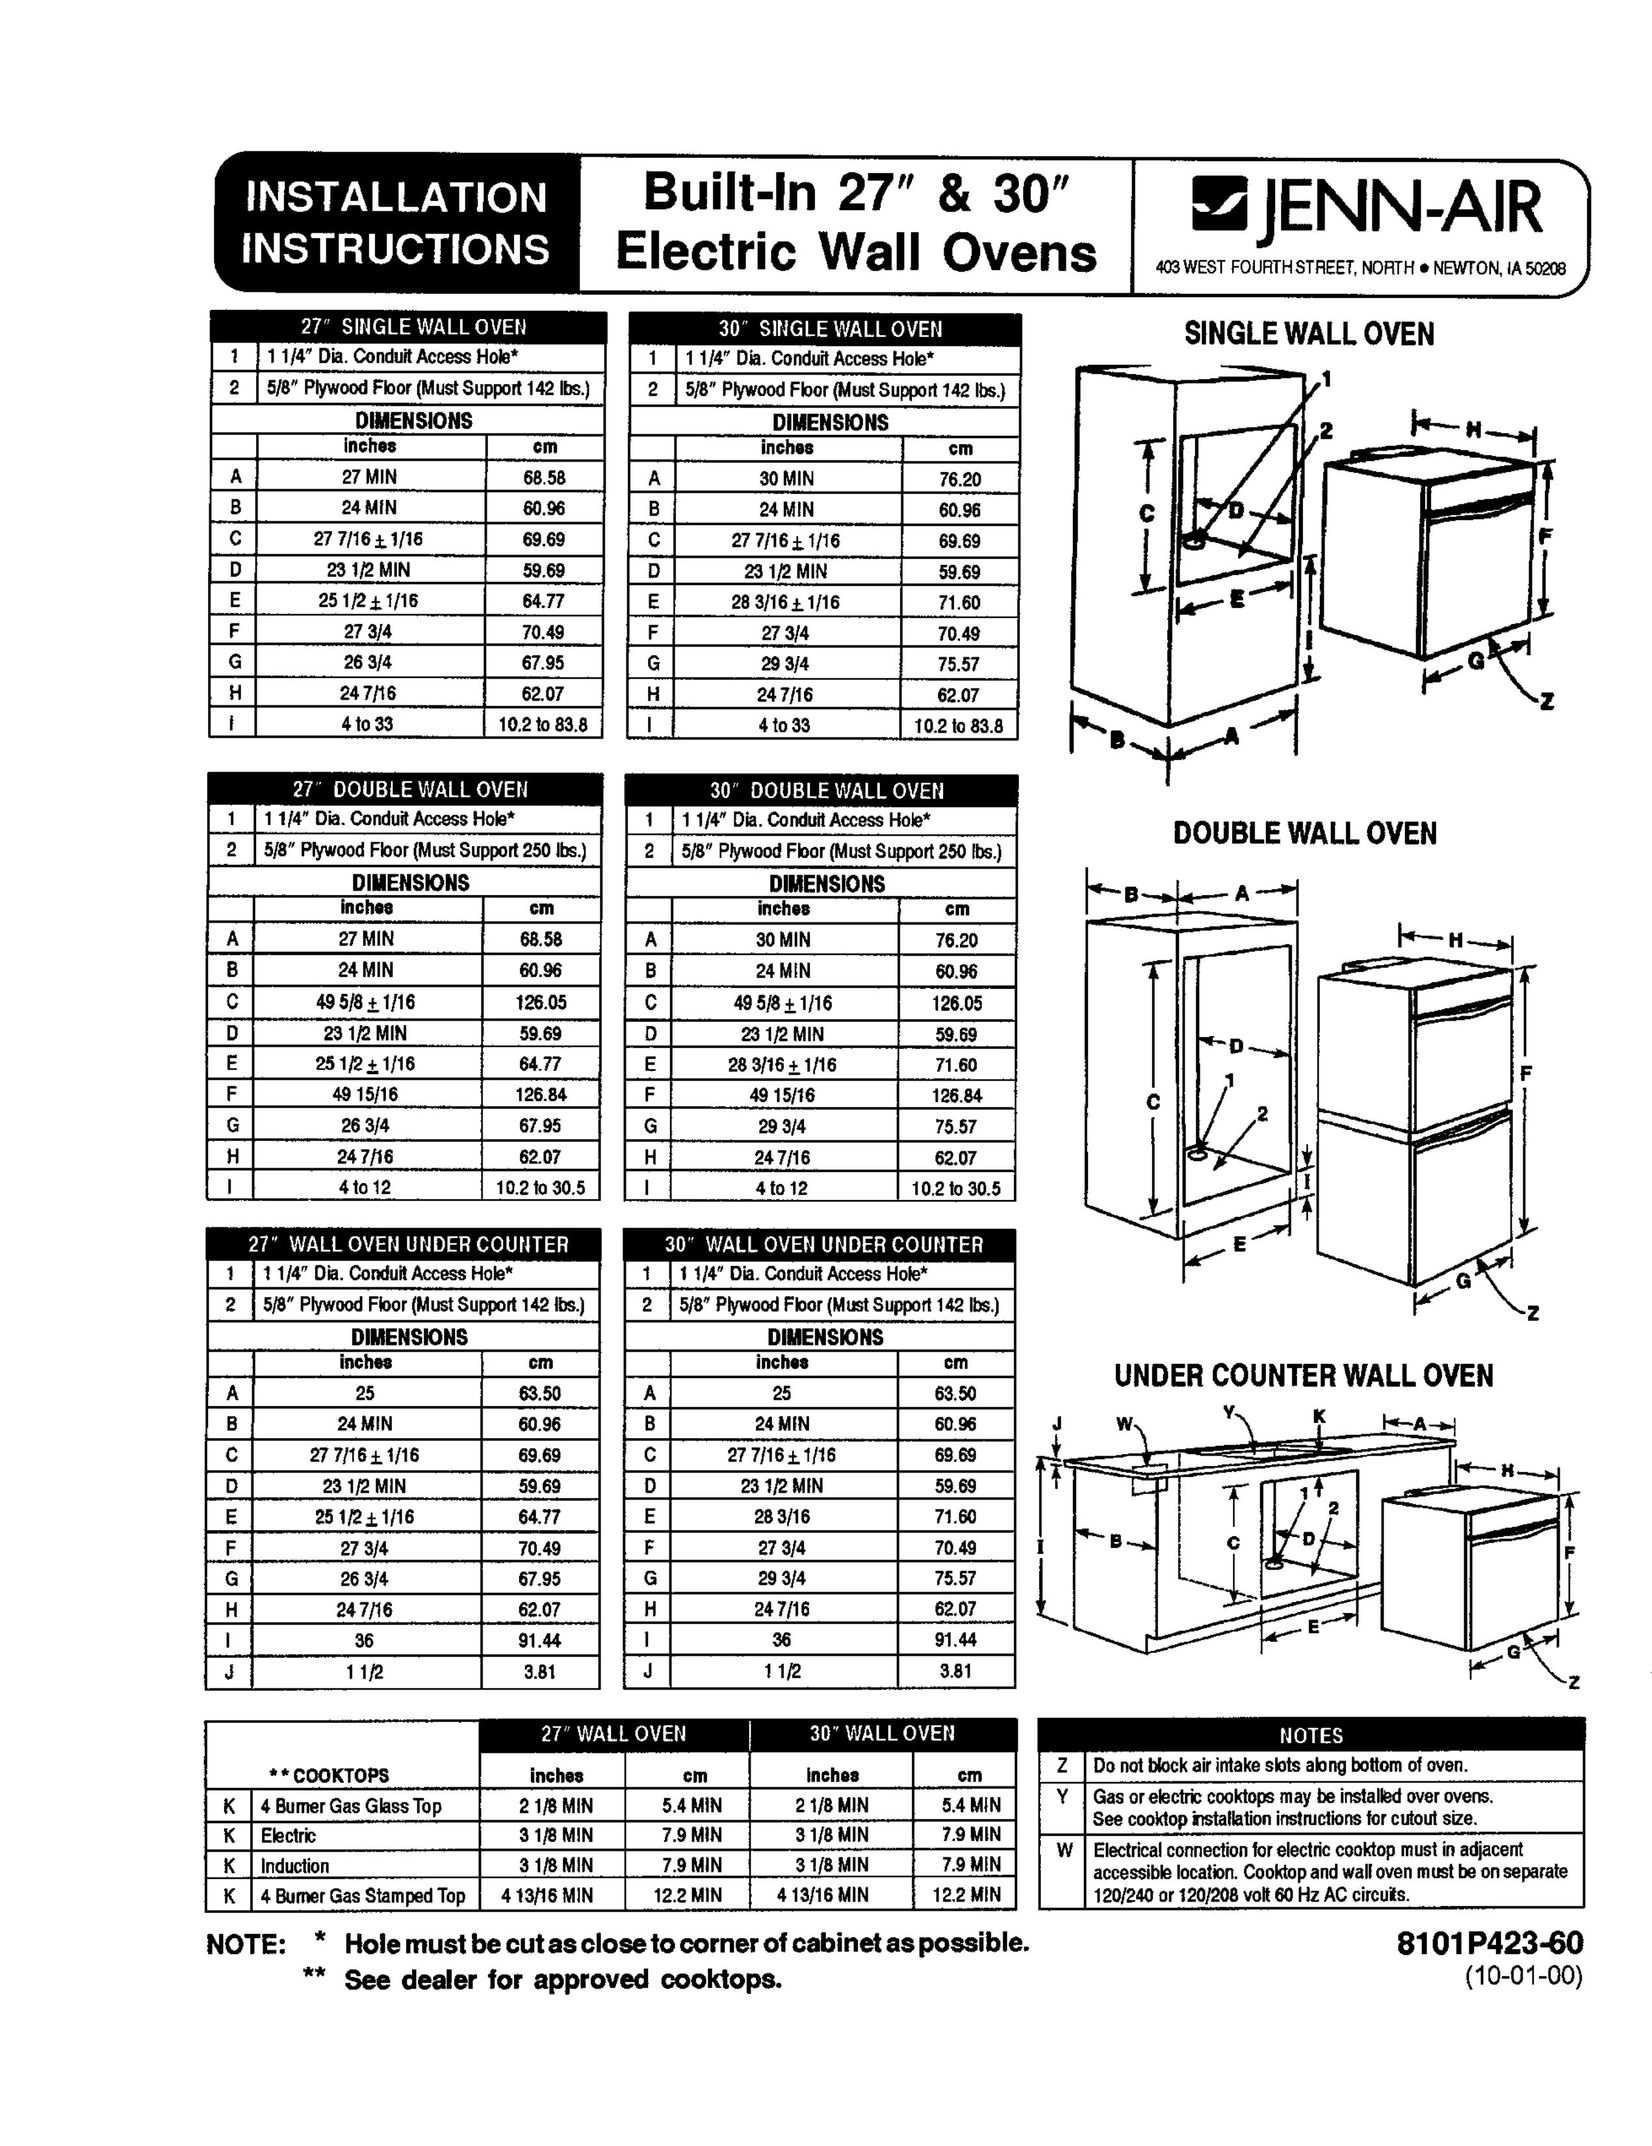 Jenn-Air 8101P423-60 Oven User Manual